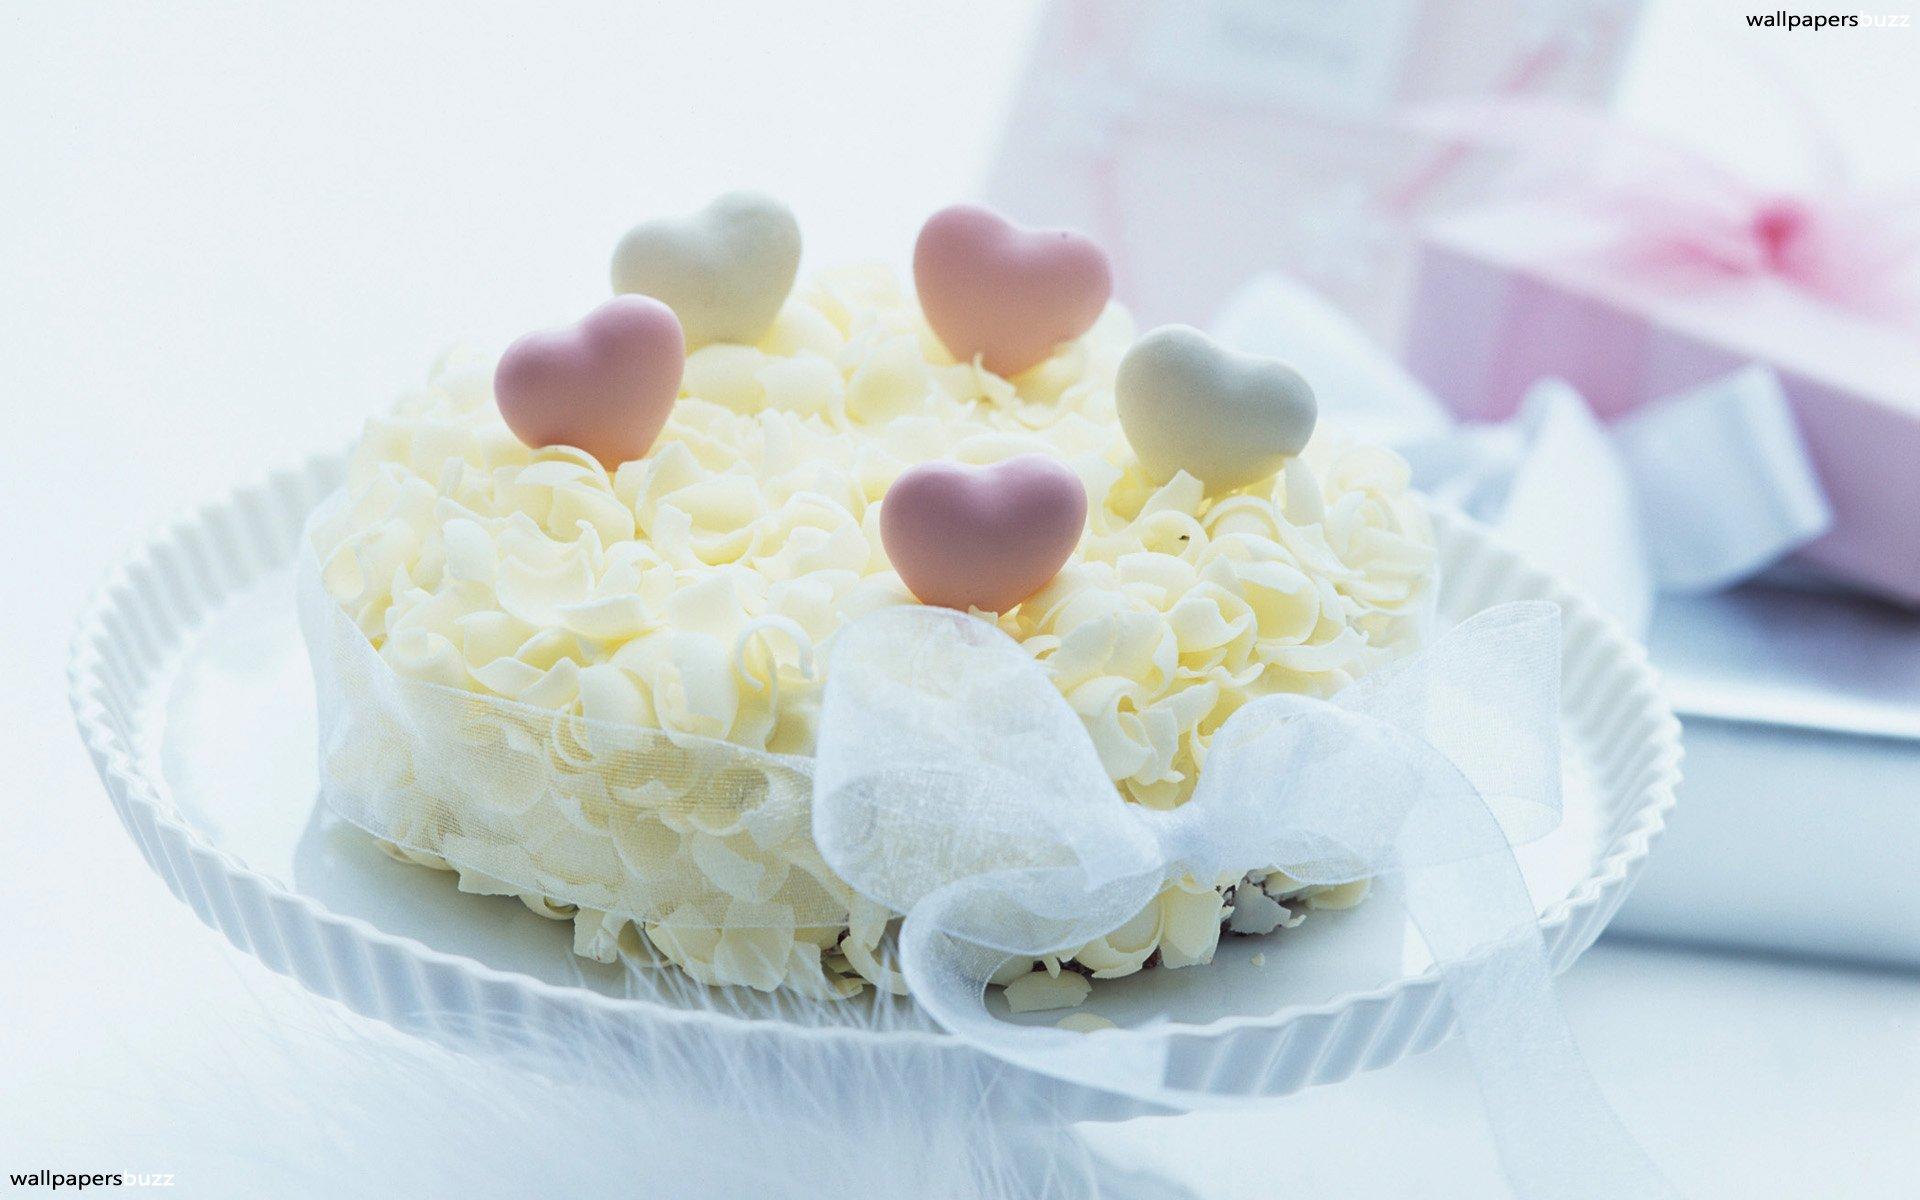 A romantic cake HD Wallpaper